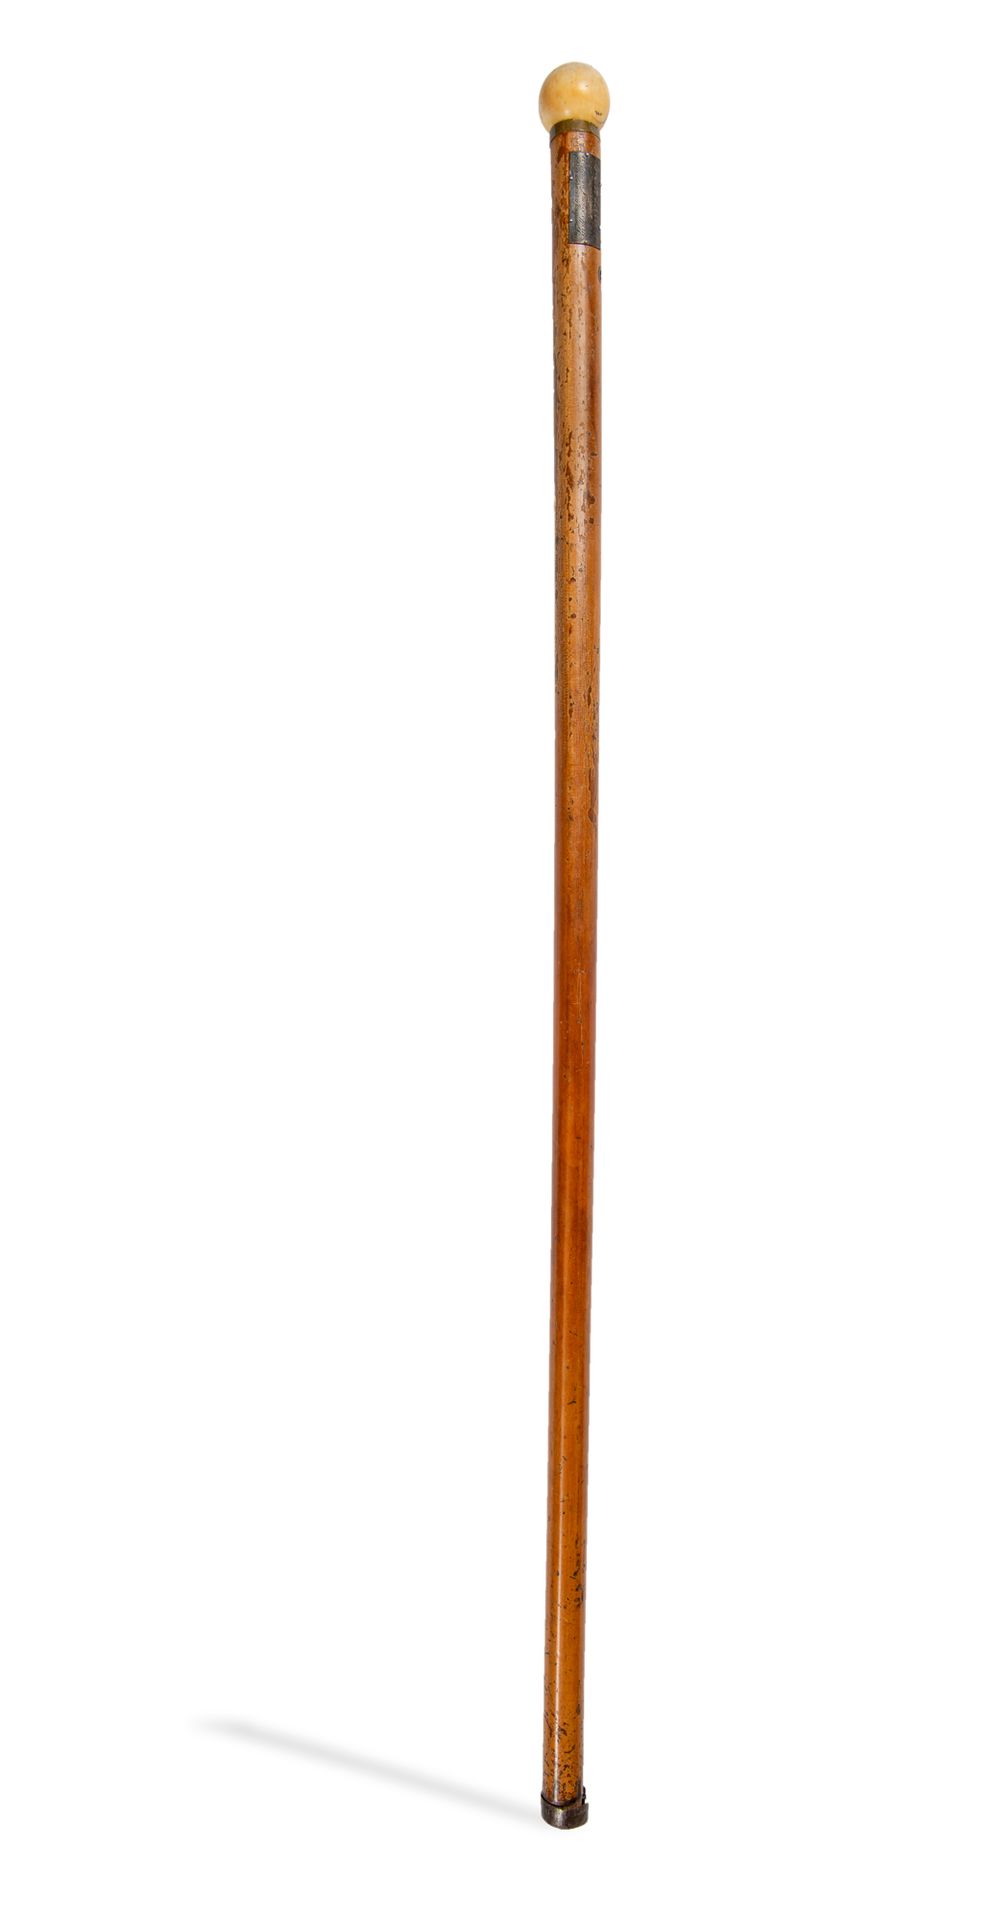 Null * 夏多布里昂手杖 带有木轴和象牙柄的手杖（在其状态下）。
上面写着 "夏多布里昂的手杖，属于阿纳托尔-法兰西的父亲，由后者提供给雅克-莱昂 "的字样&hellip;